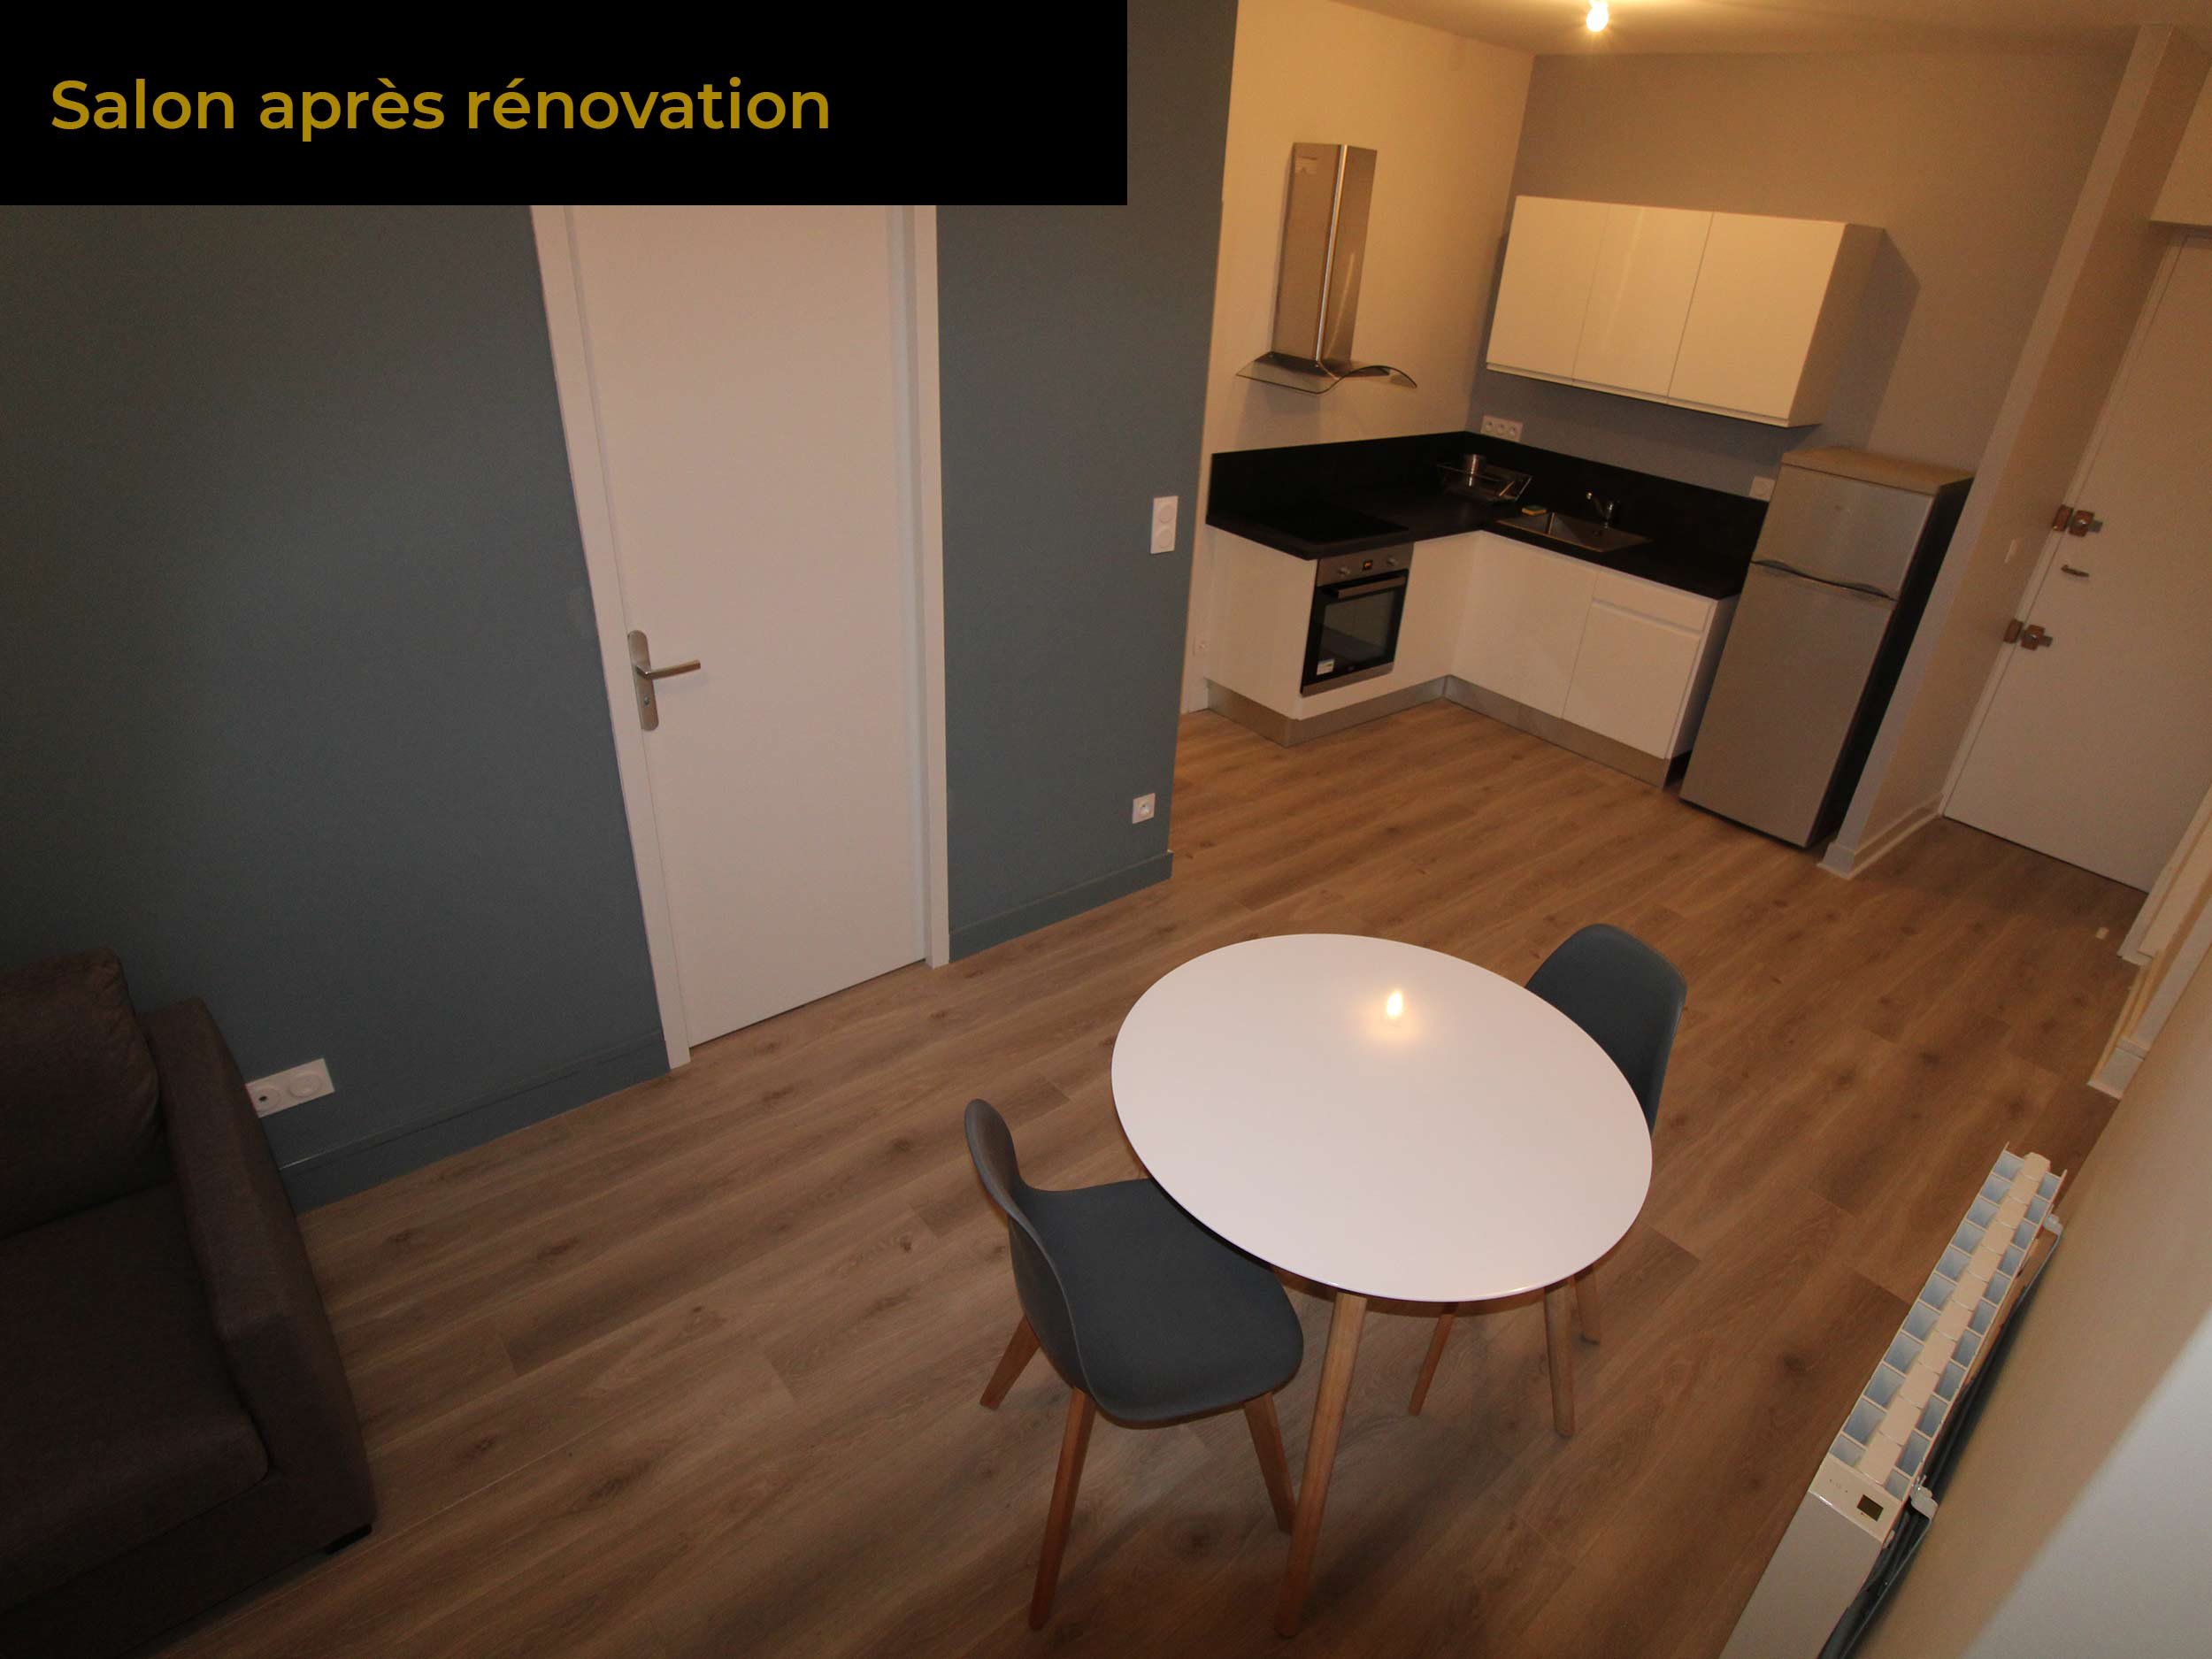 7-transformer-un-plateau-en-appartement-salon-apres-renov